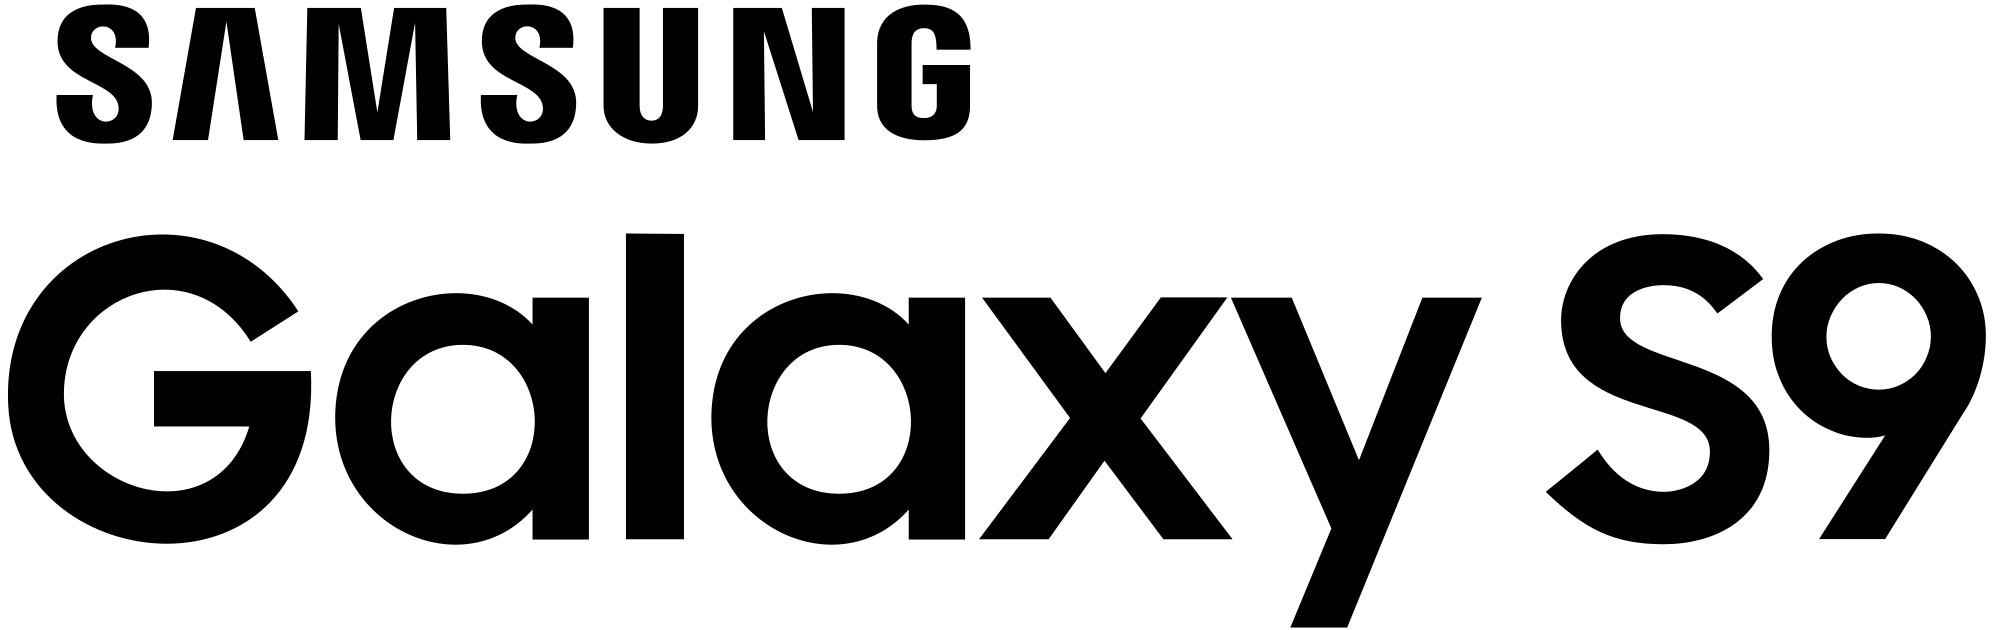 Samsung S9 Logo - File:Samsung Galaxy S9 logo.svg - Wikimedia Commons